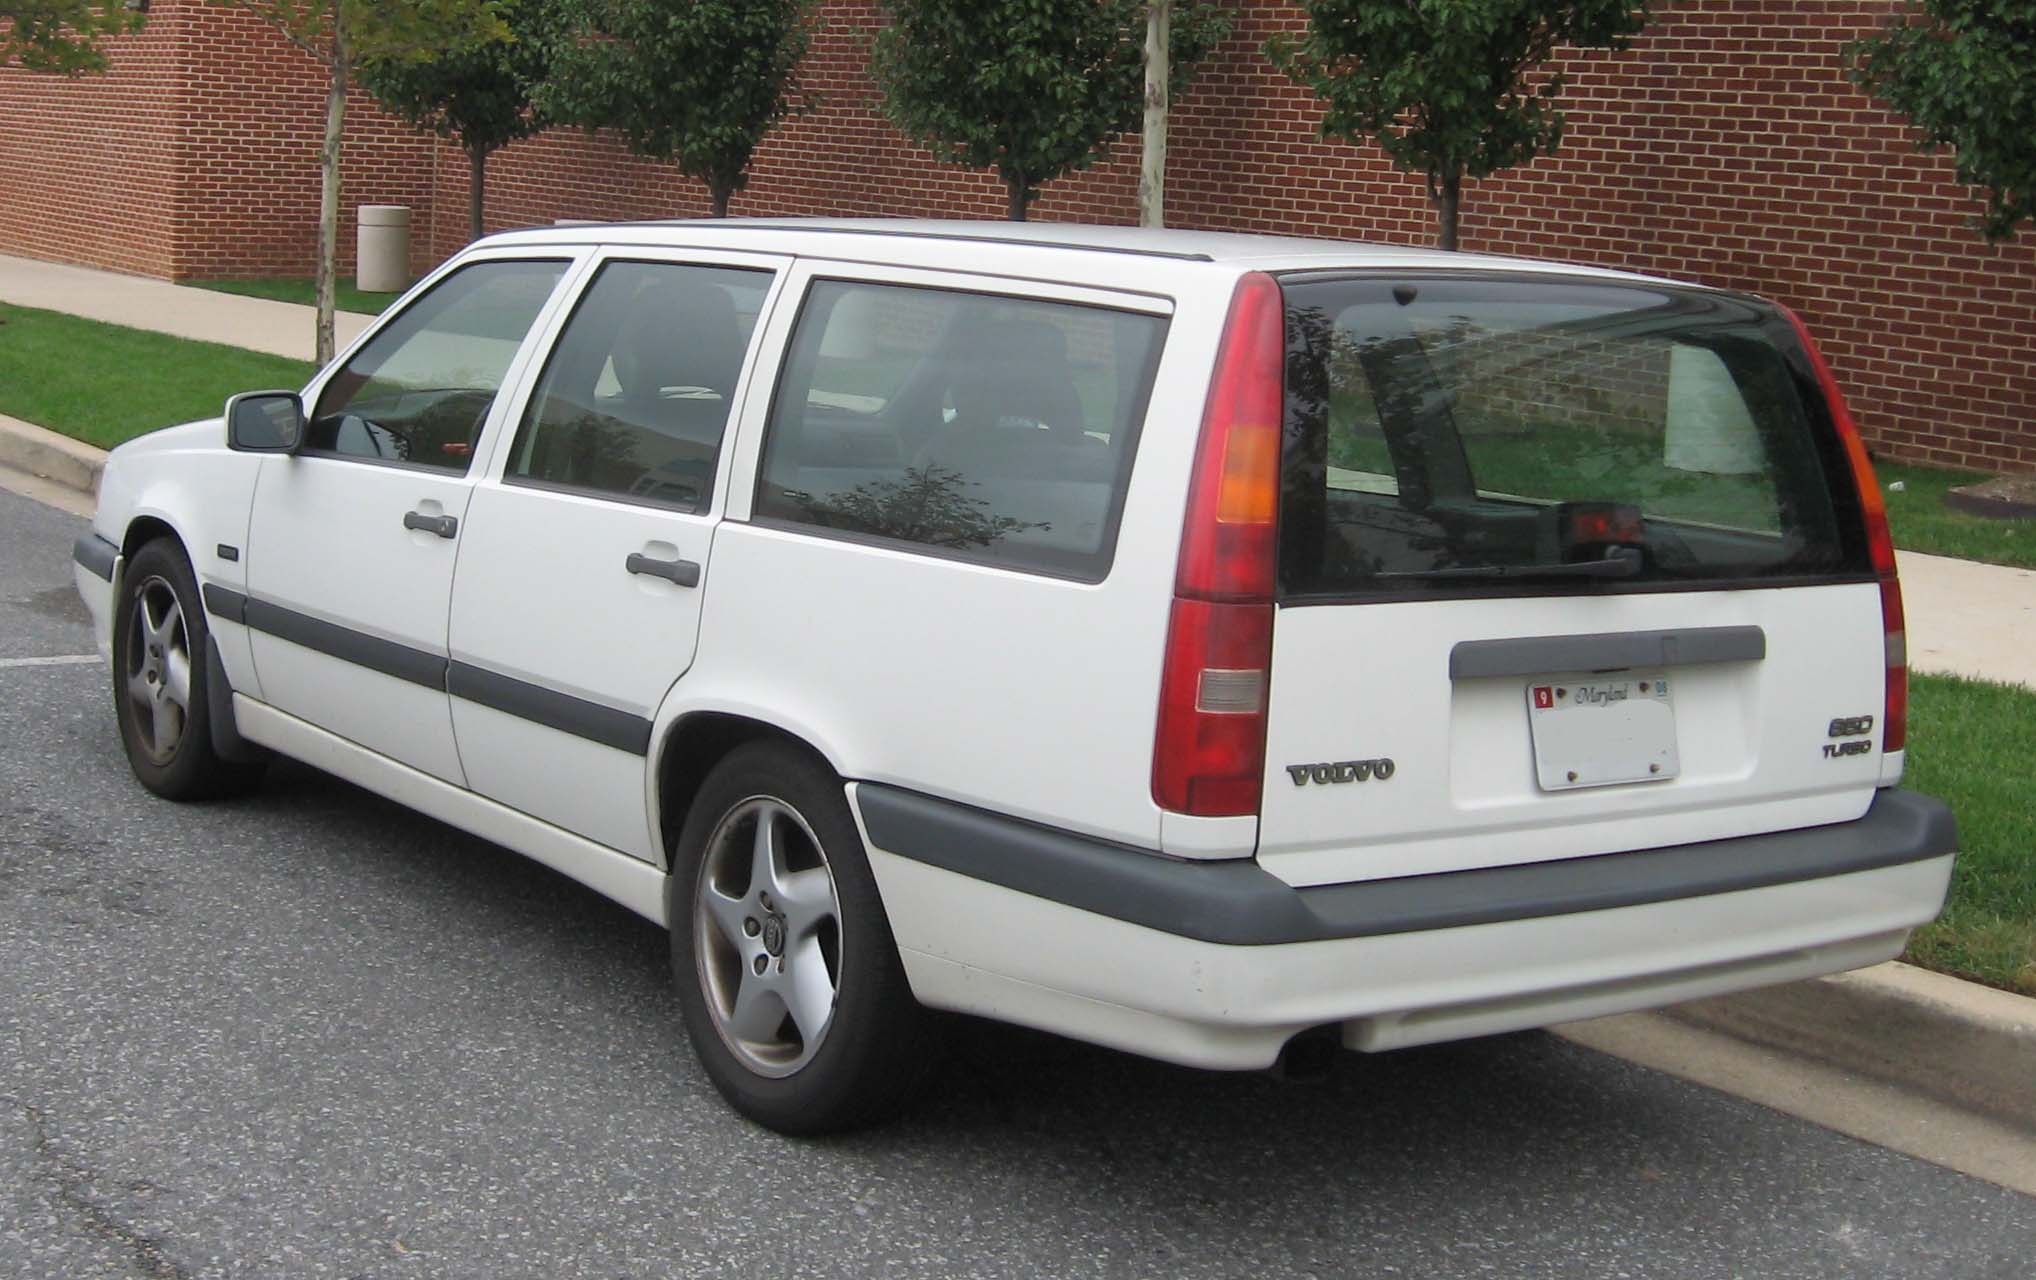 File:Volvo-850-wagon-rear.jpg